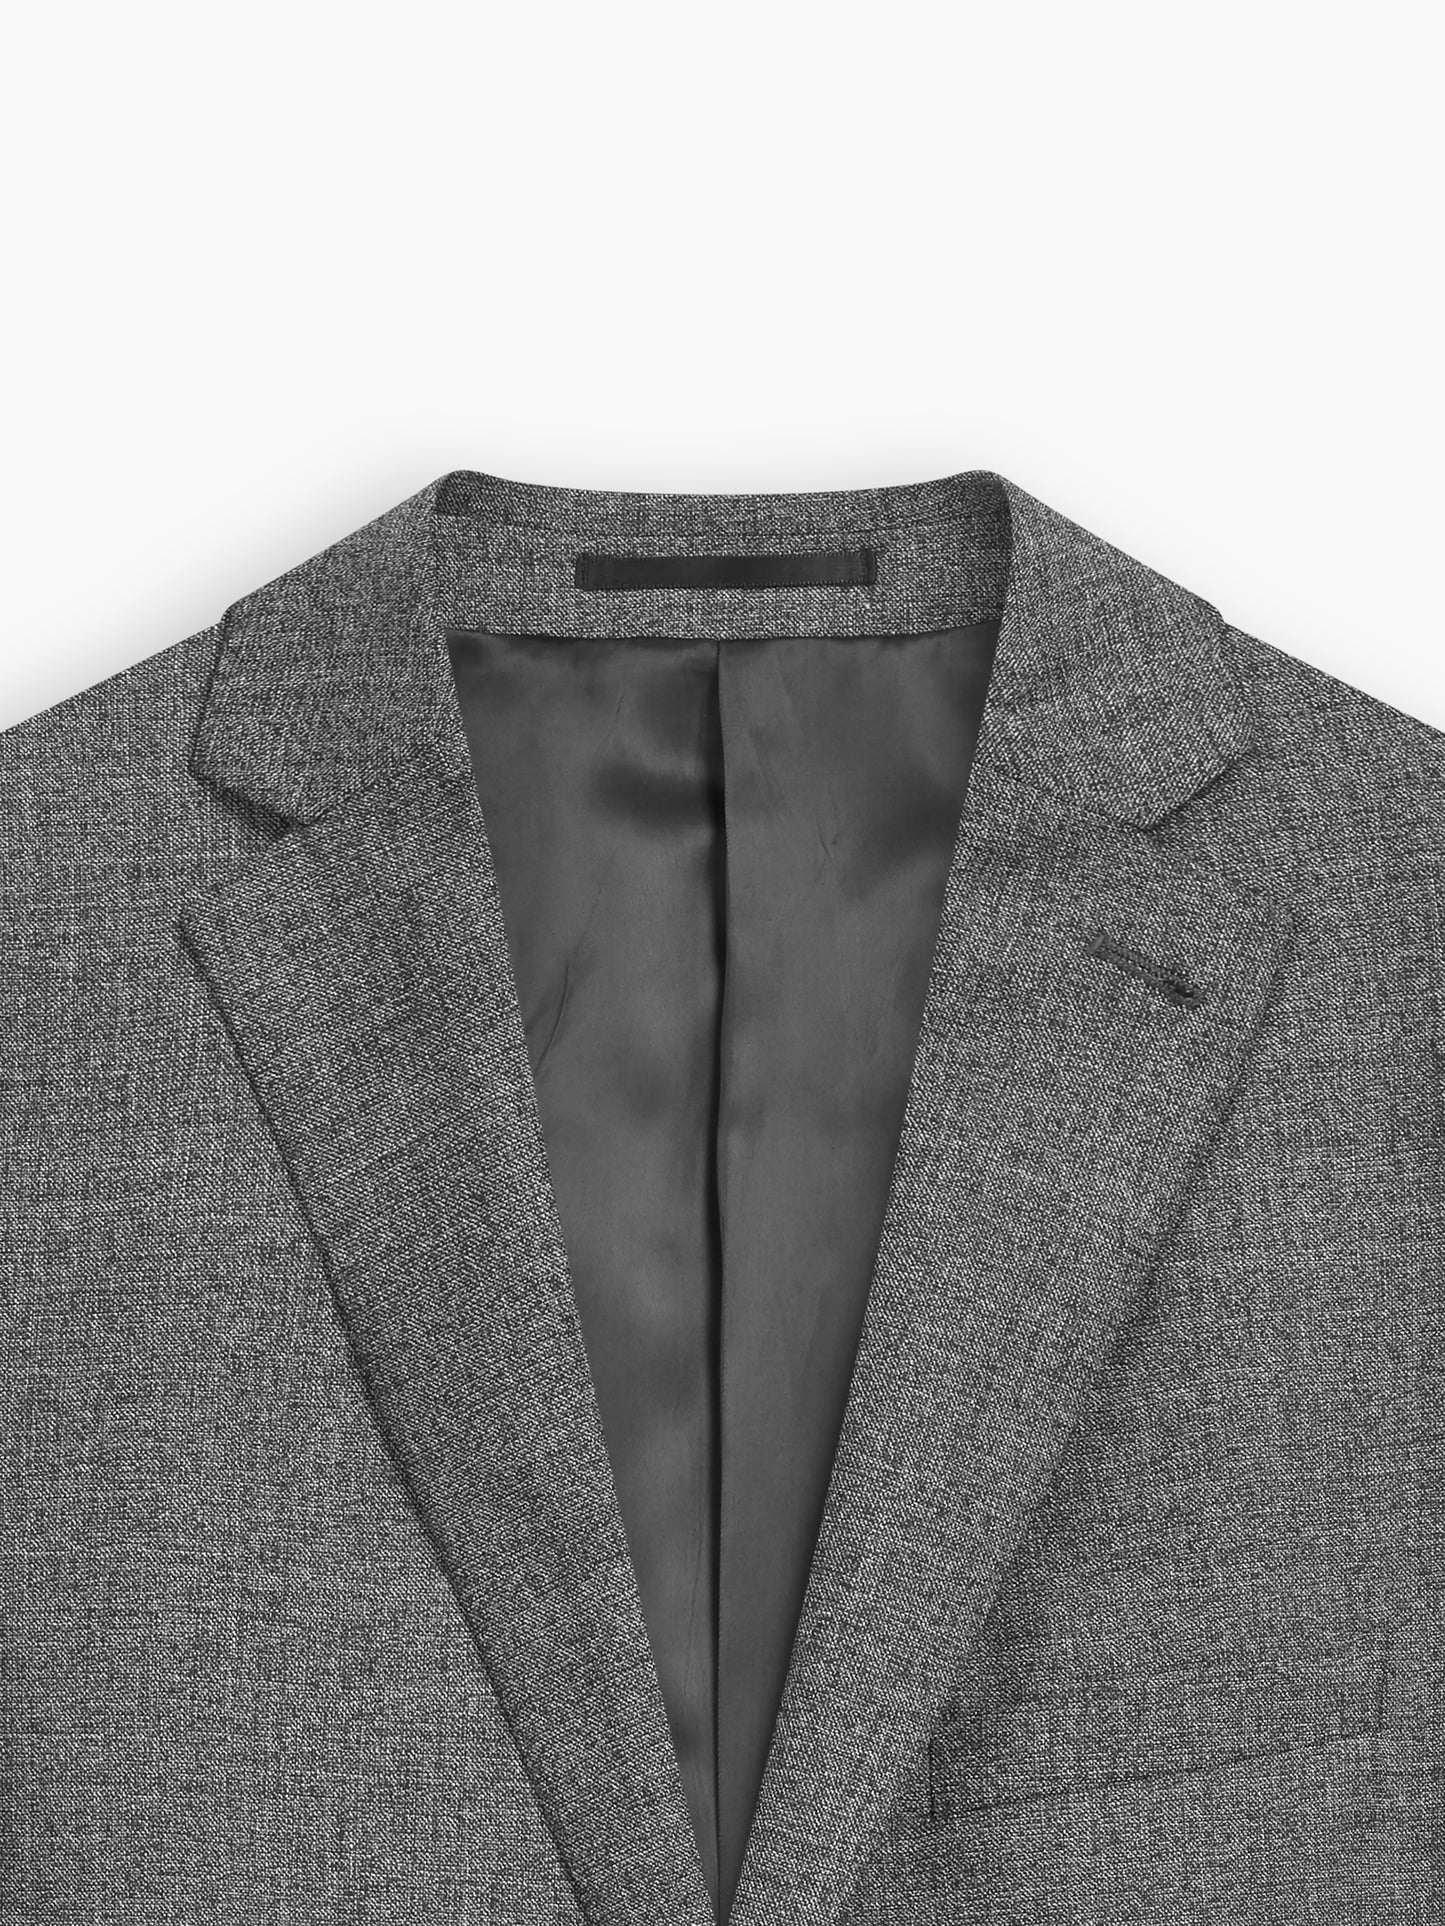 Jordan Polywool Skinny Grey Sharkskin Suit Jacket